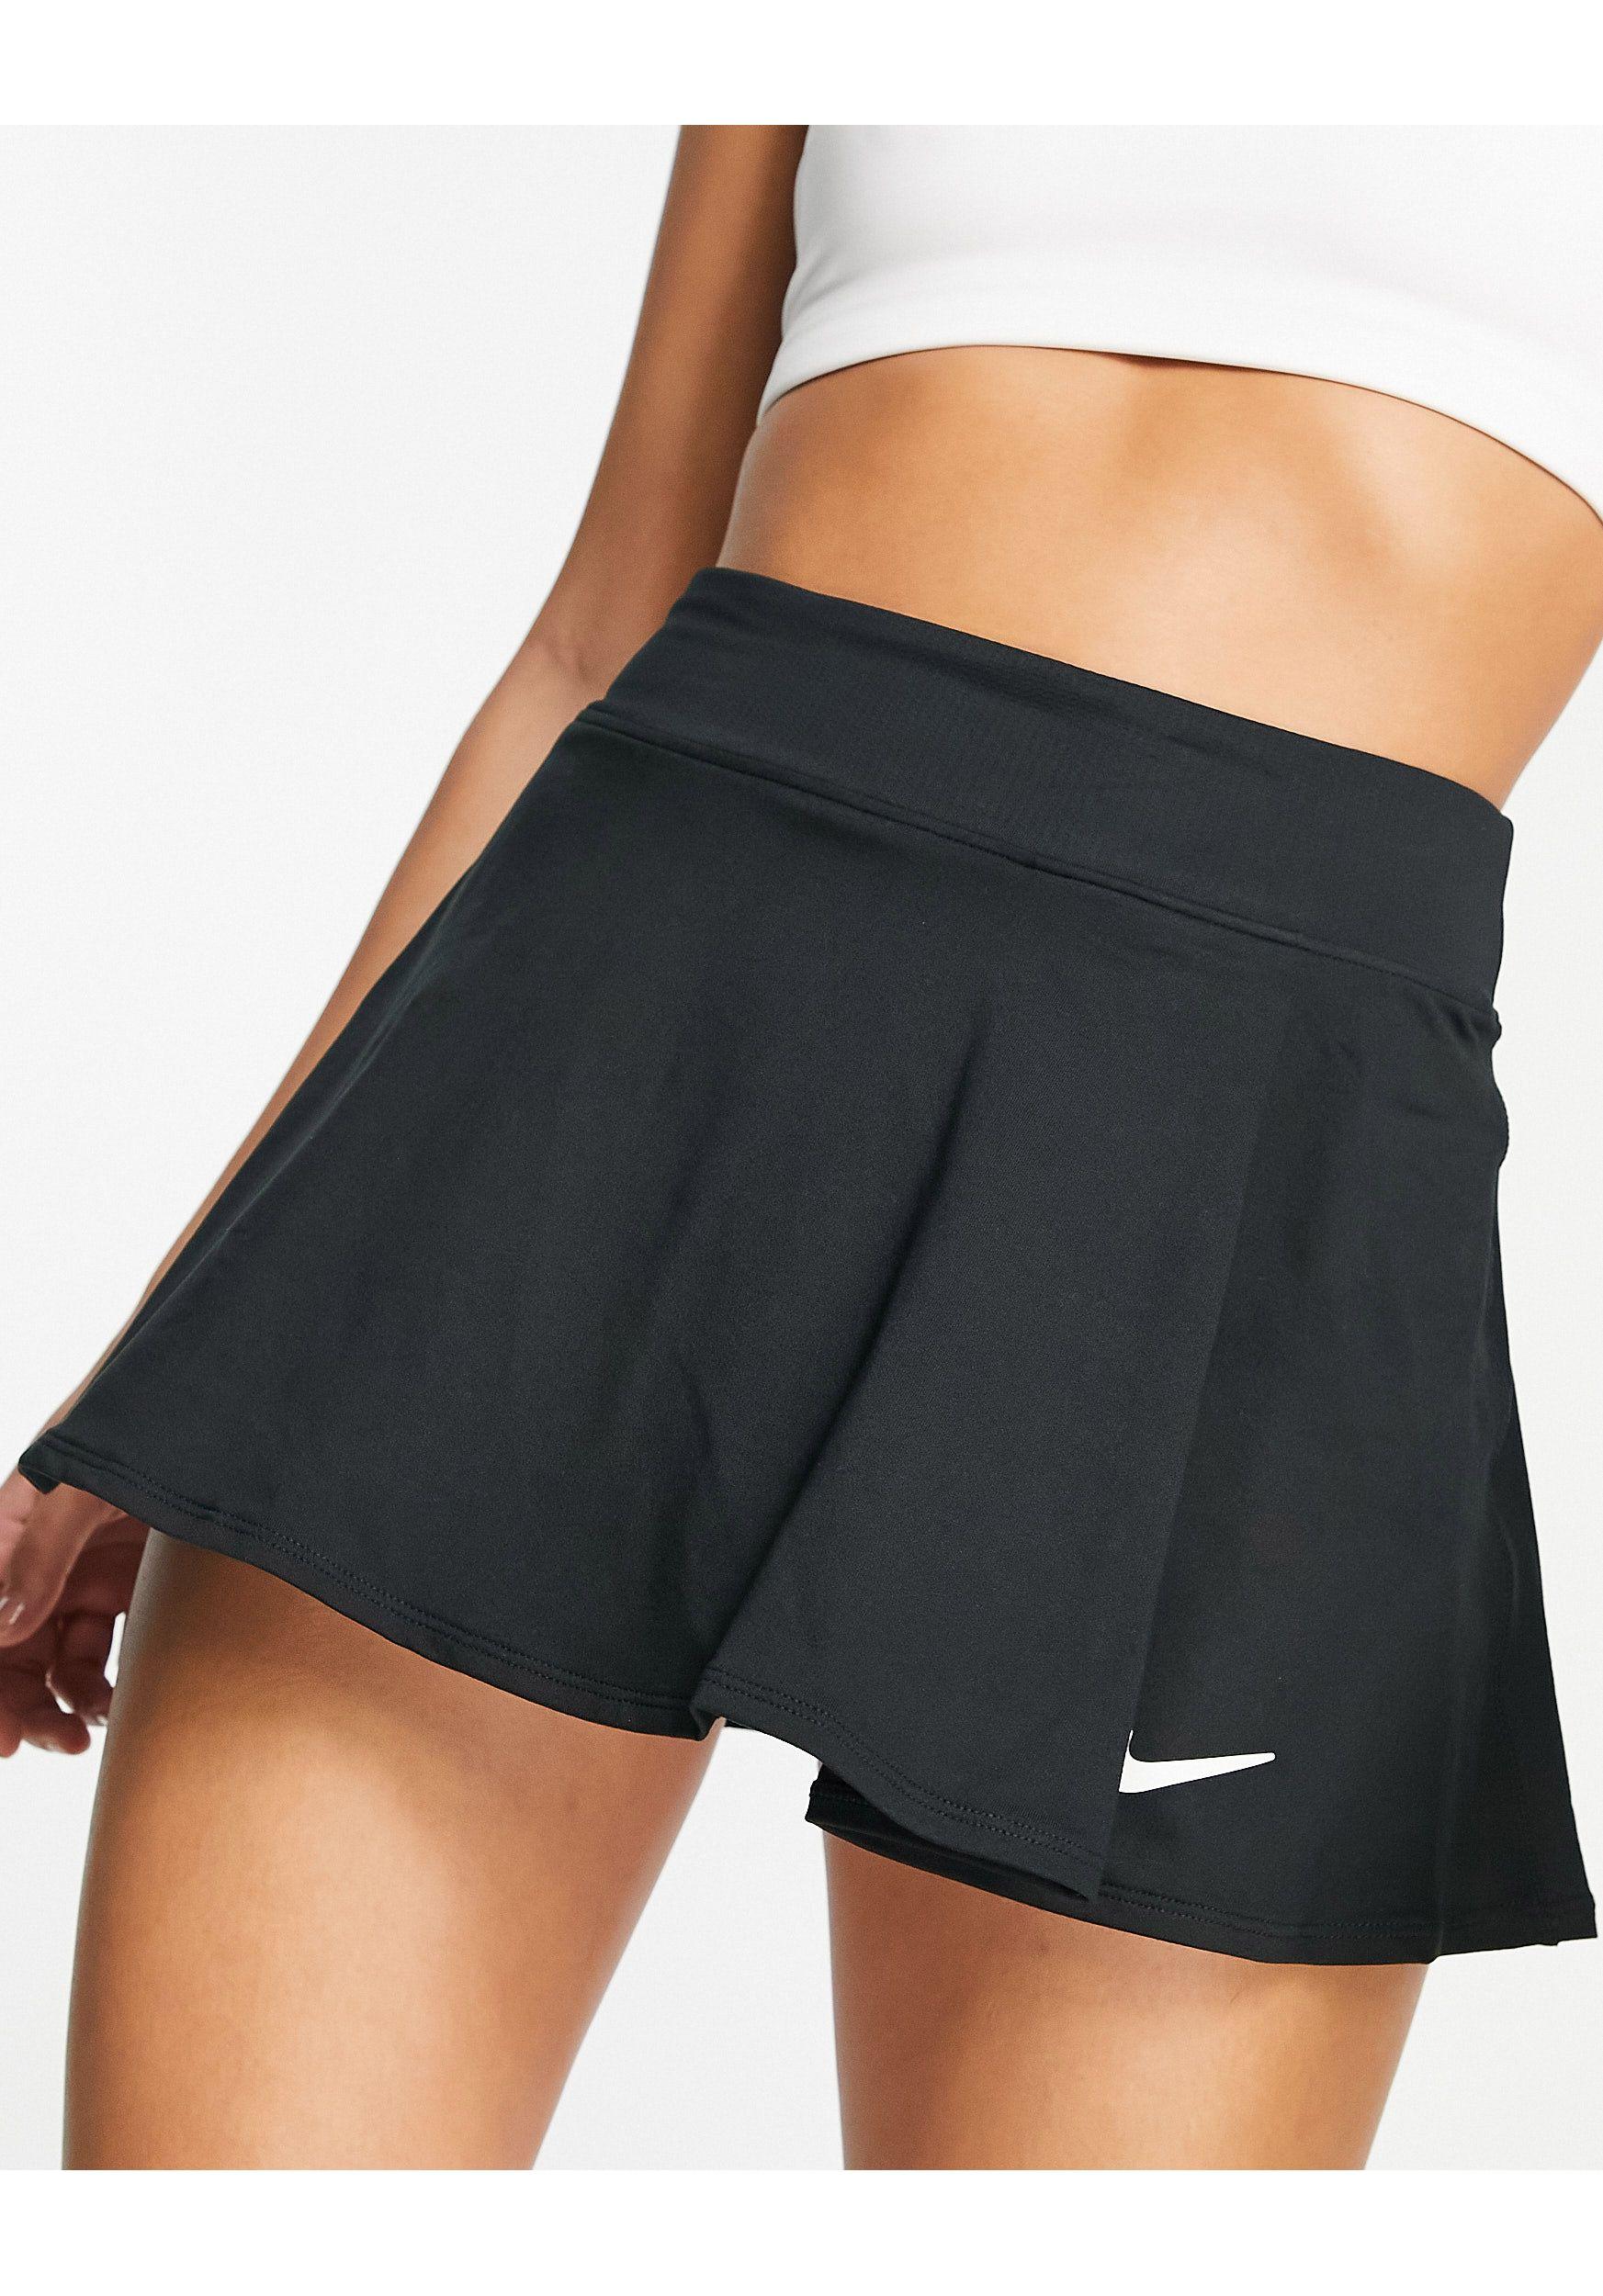 Nike Court Dri-fit Victory Tennis Skirt in Black | Lyst